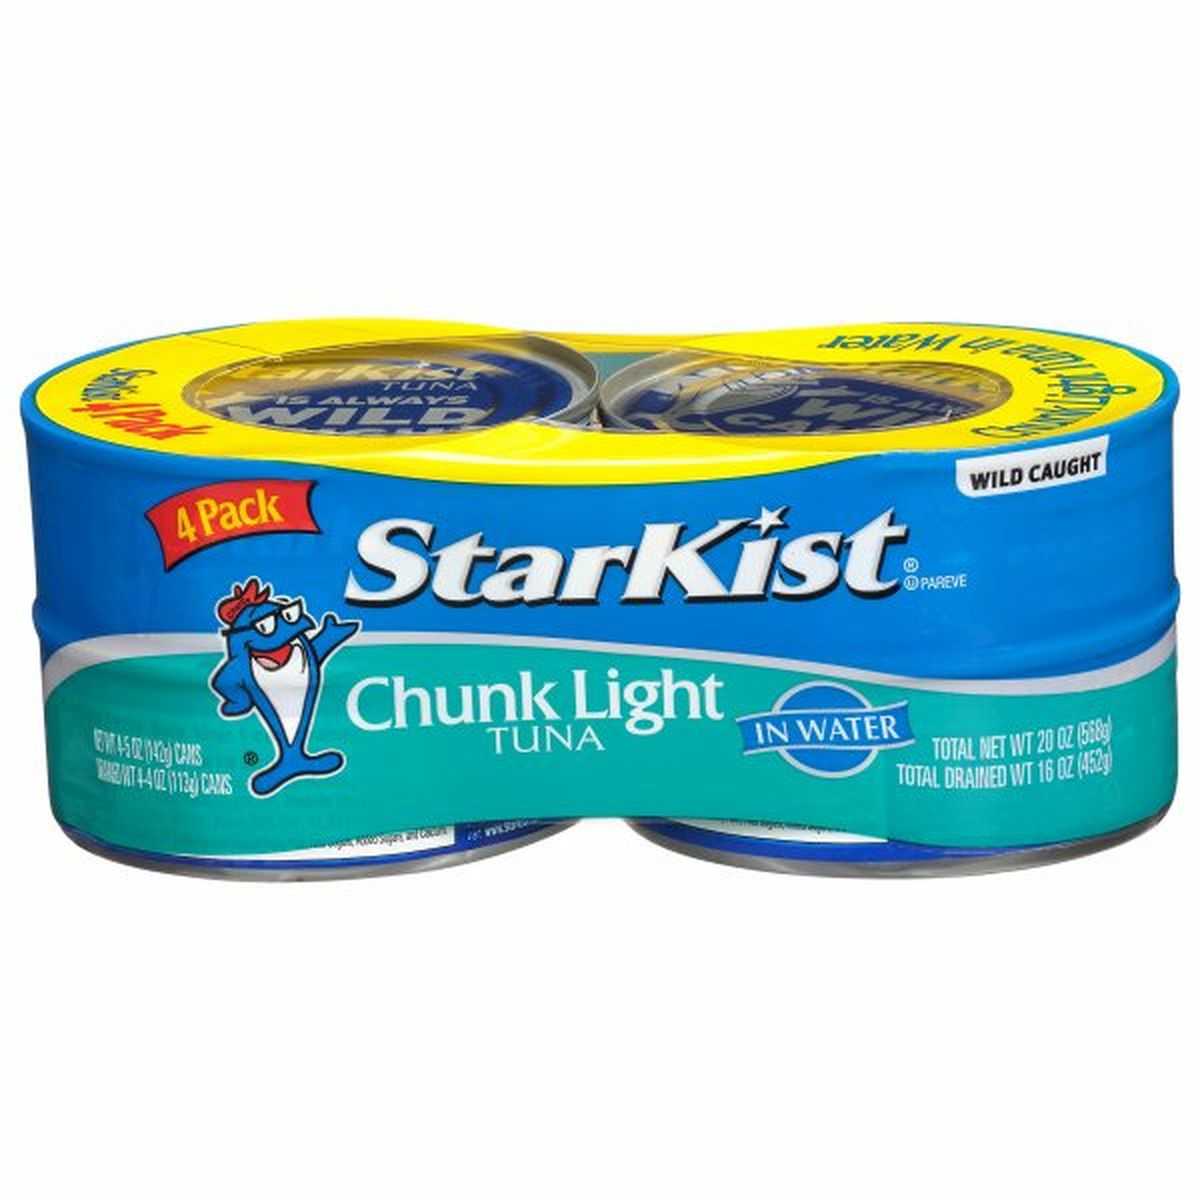 Calories in StarKist Tuna in Water, Chunk Light, 4 Pack